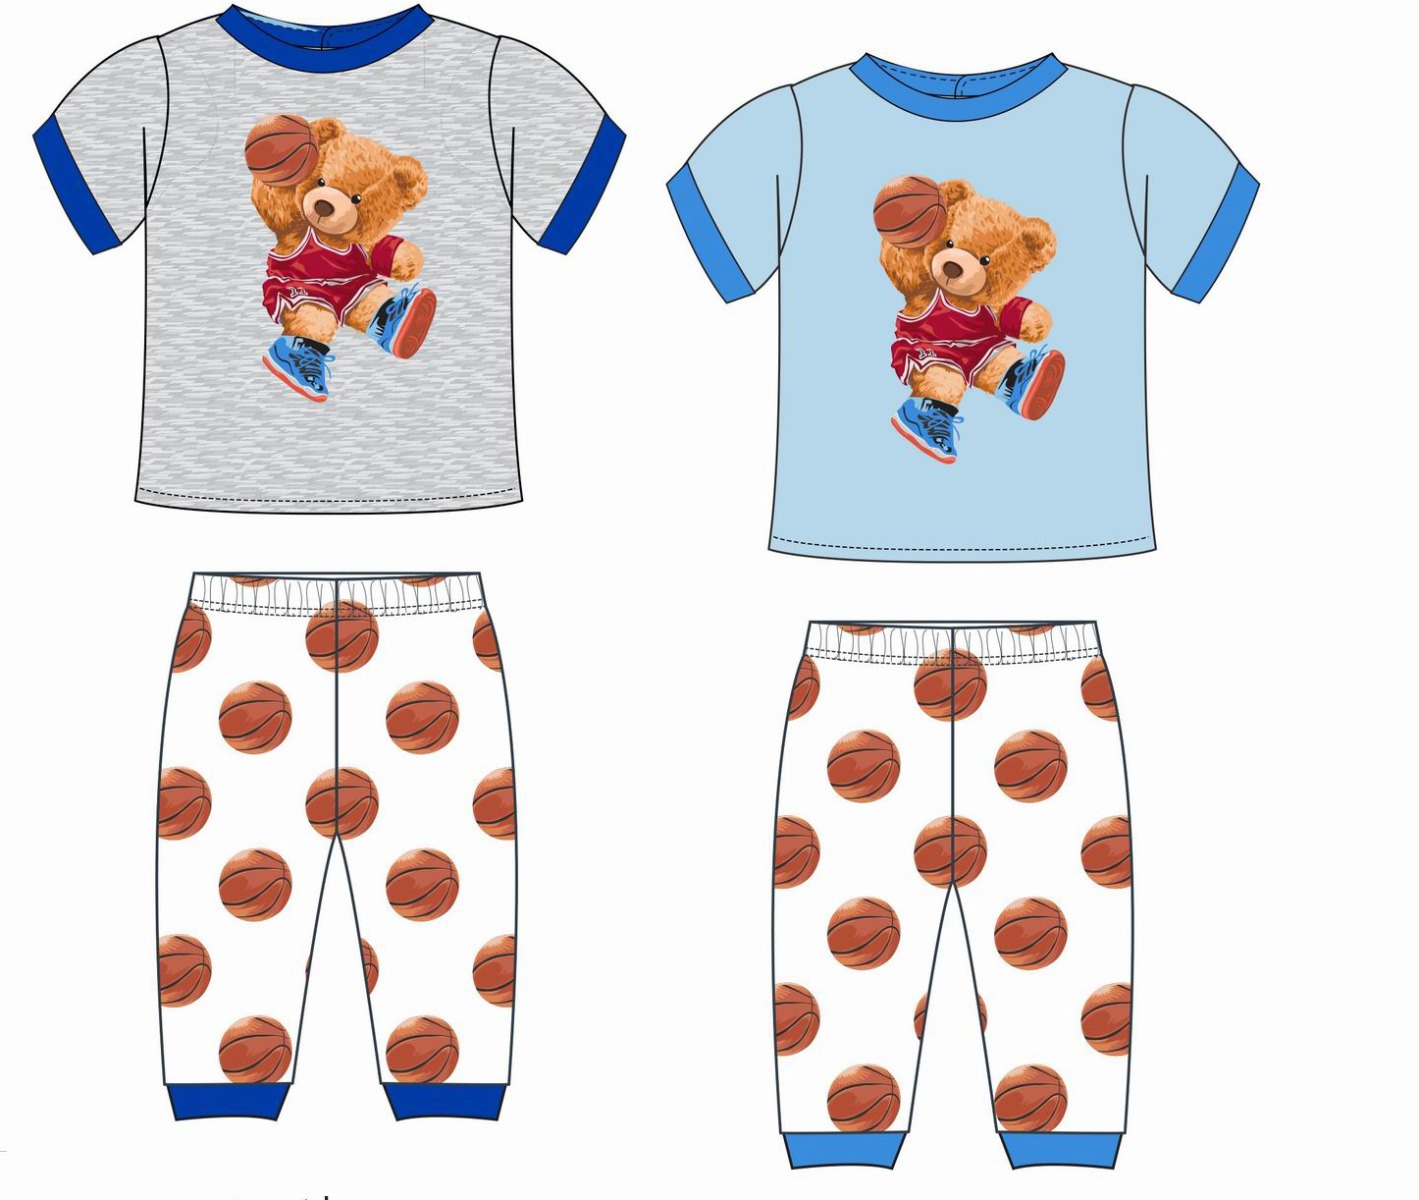 Boy's 2 PC. Rib Pajama Sets w/ Short-Sleeve Shirt & Pull-On Pants - BASKETBALL Bear Print - Ages 6-1